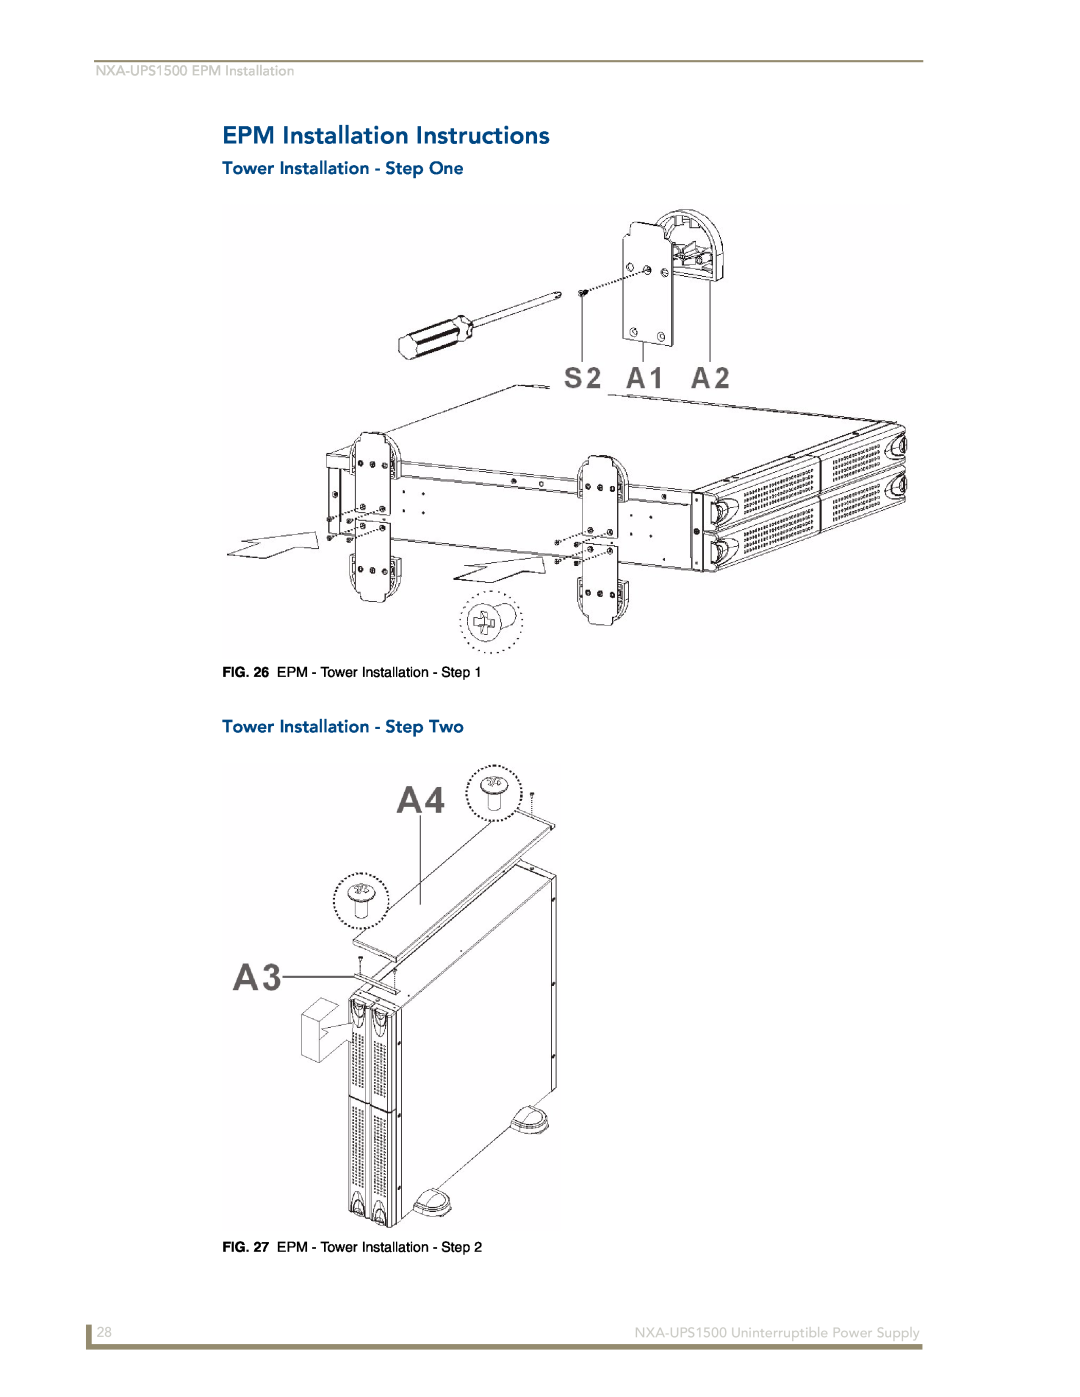 AMX NXA-UPS1500 manual EPM Installation Instructions, Tower Installation - Step One, Tower Installation - Step Two 